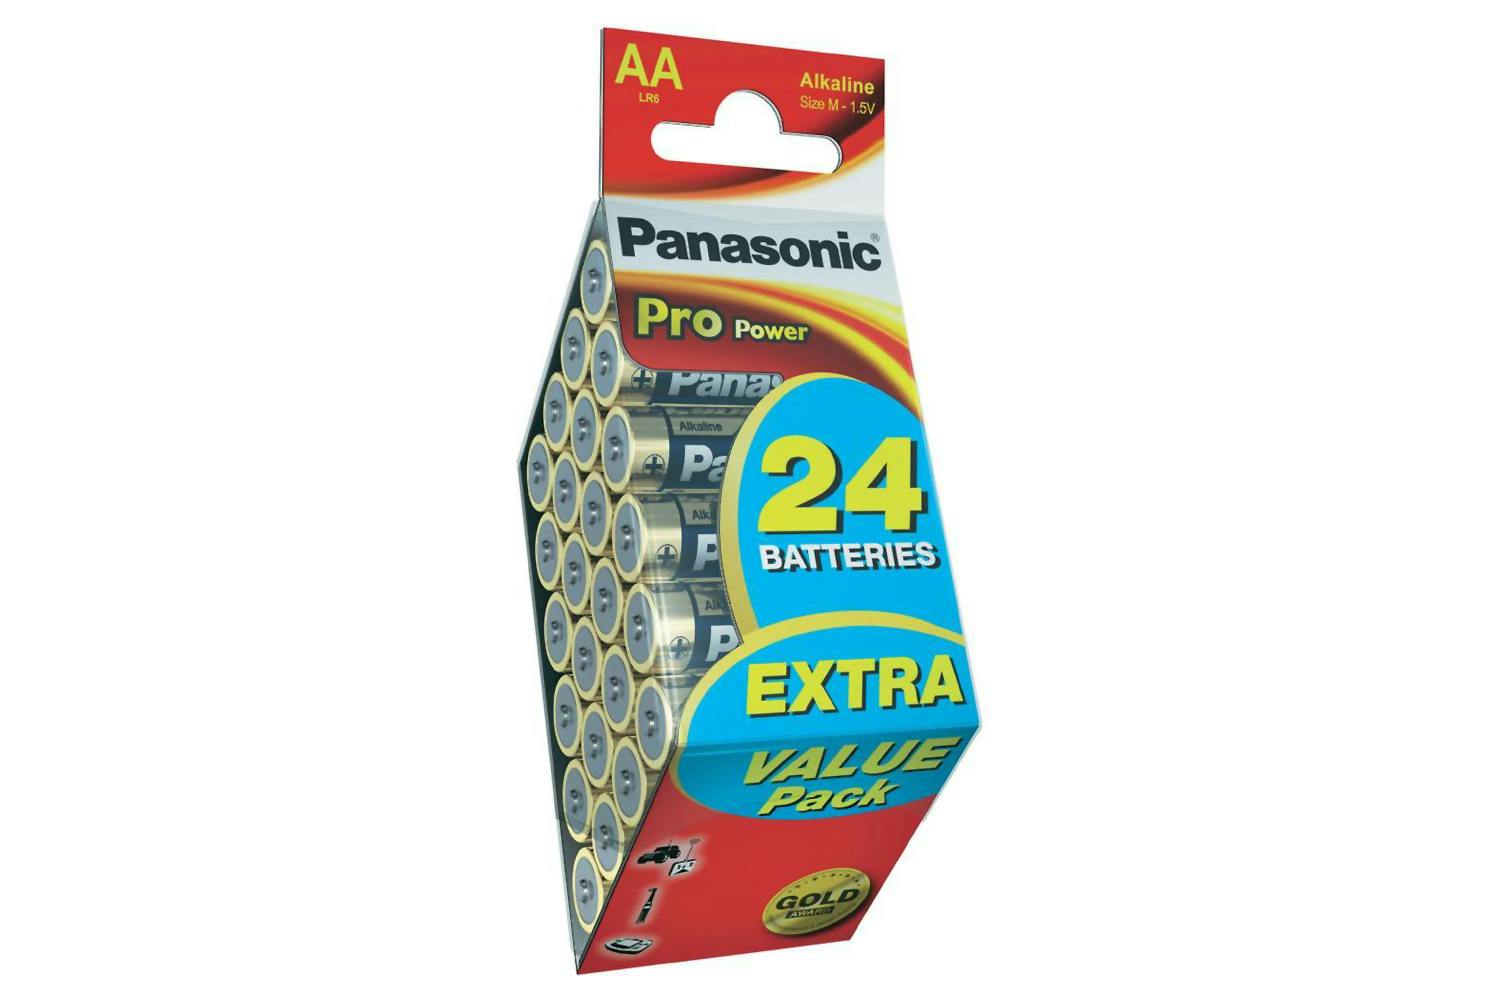 Panasonic AA Pro Power Batteries | 24 Pack